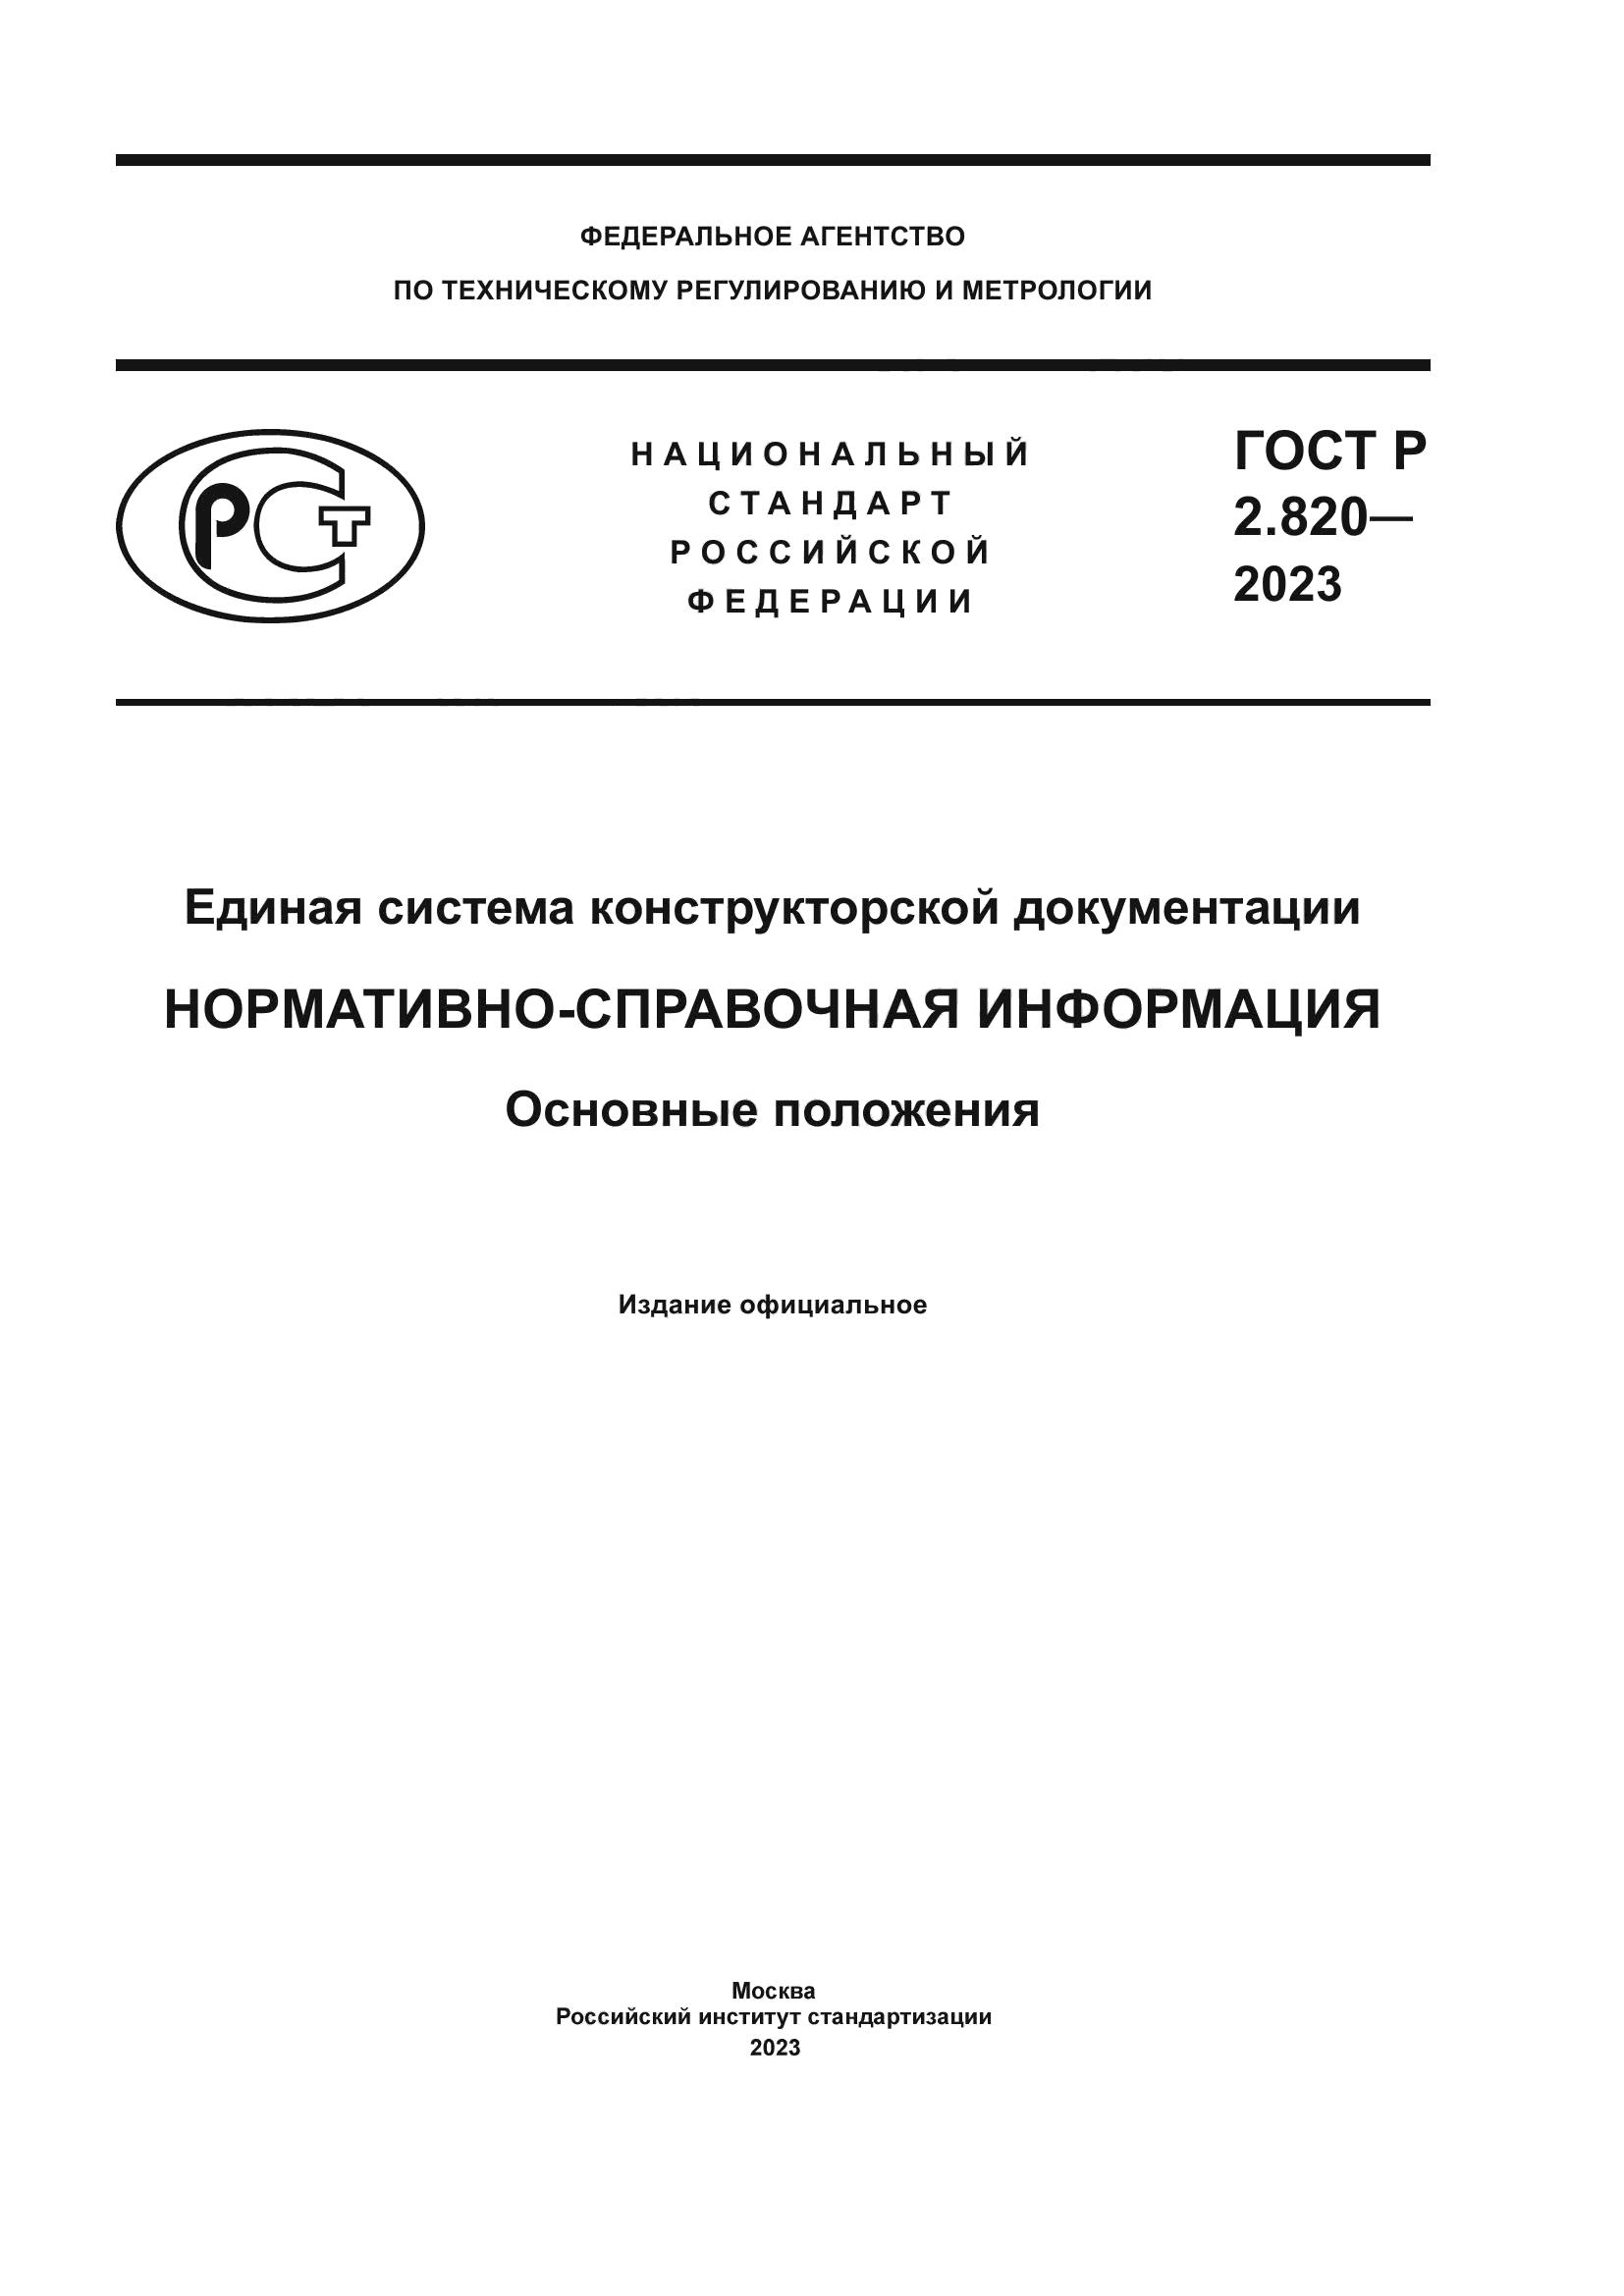 ГОСТ Р 2.820-2023